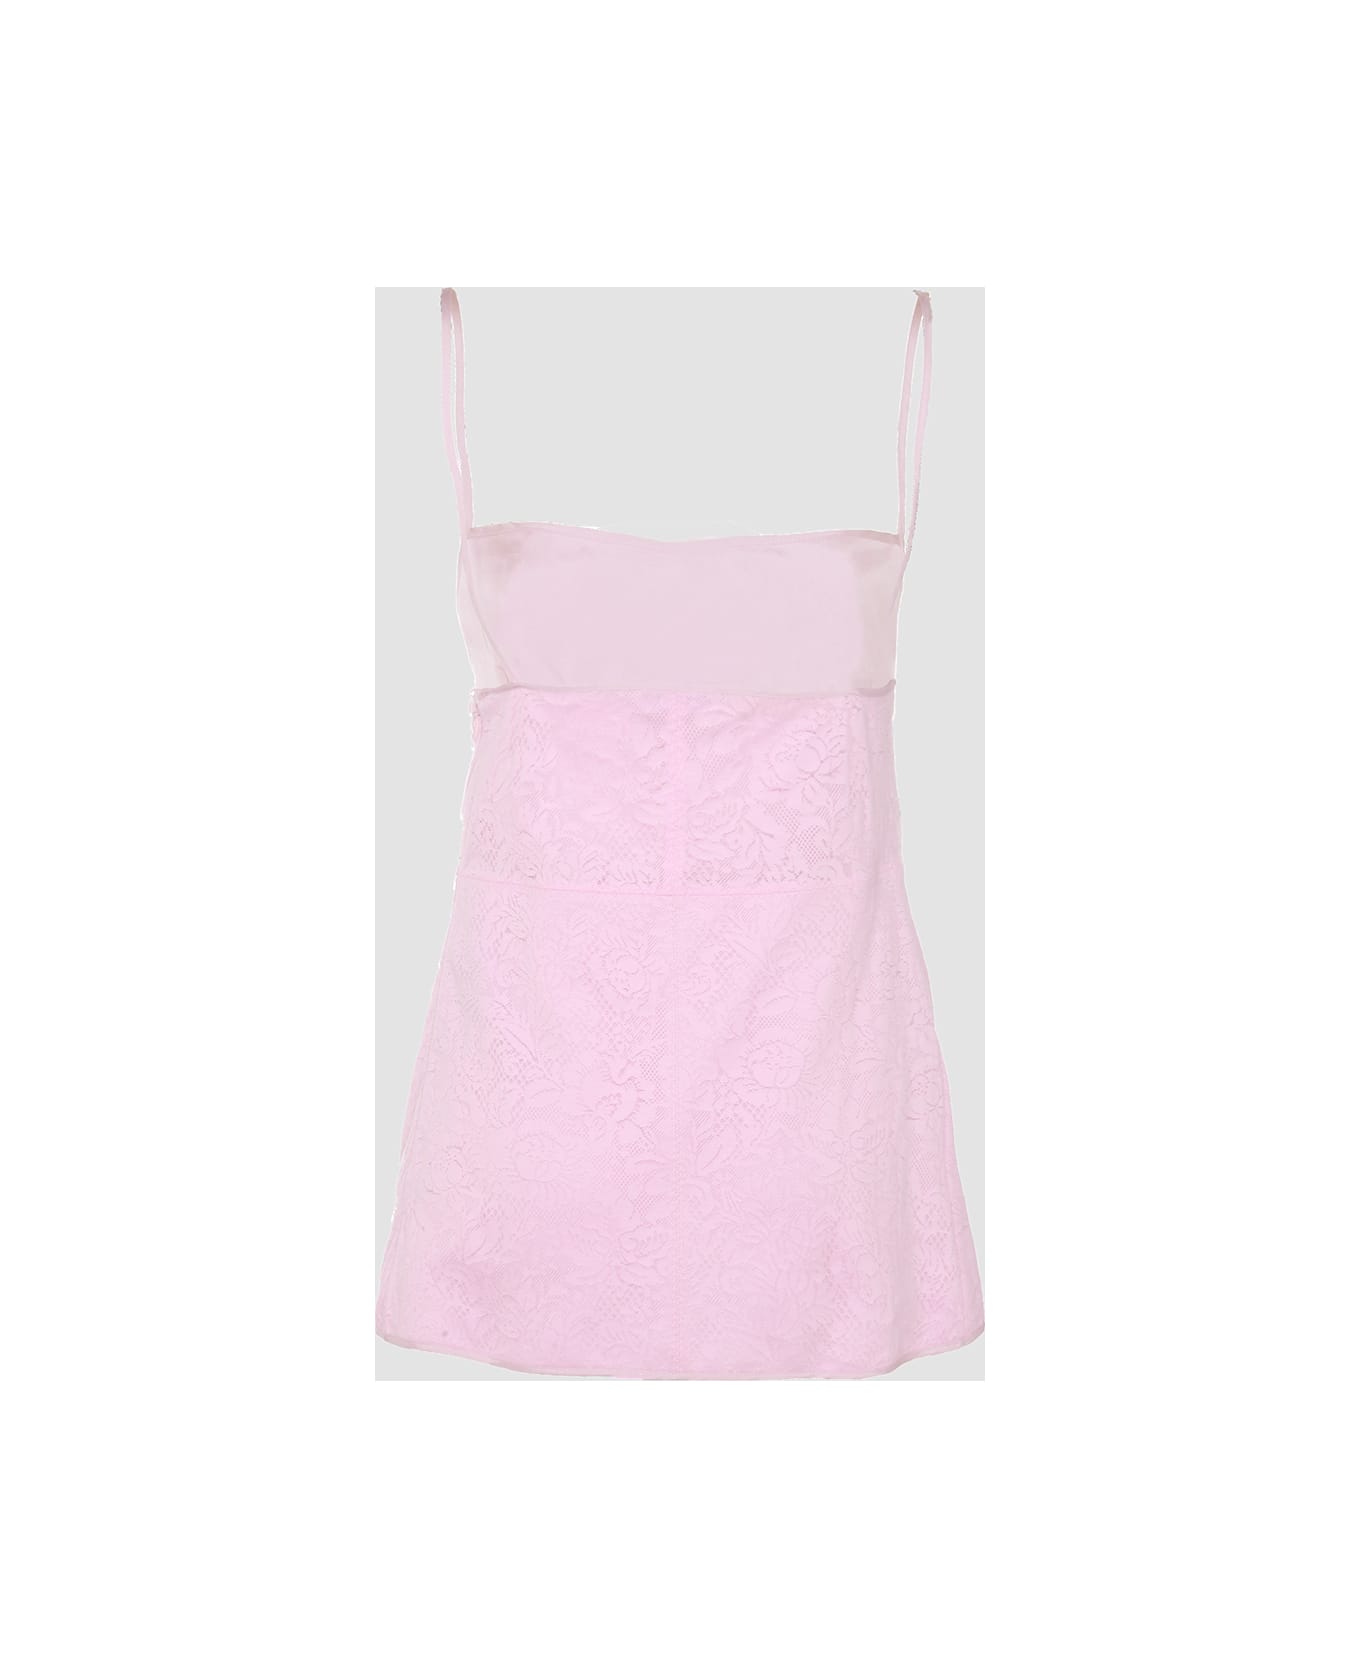 Jil Sander Pink Cotton Top - MARSHMALLOW キャミソール